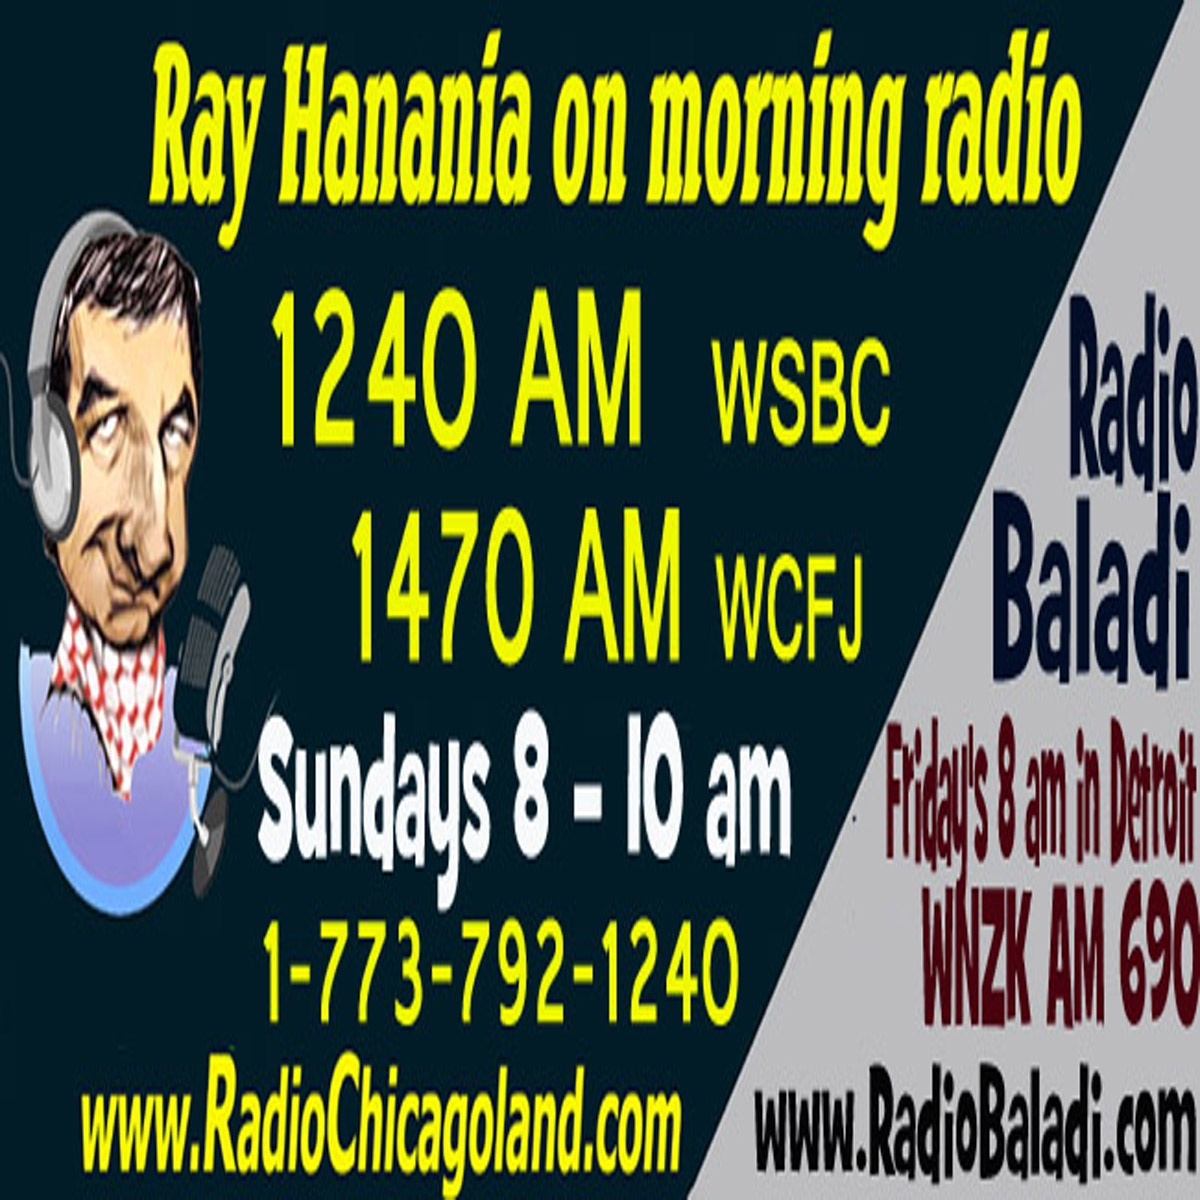 08-31-12 Radio Baladi Rachel Corrie